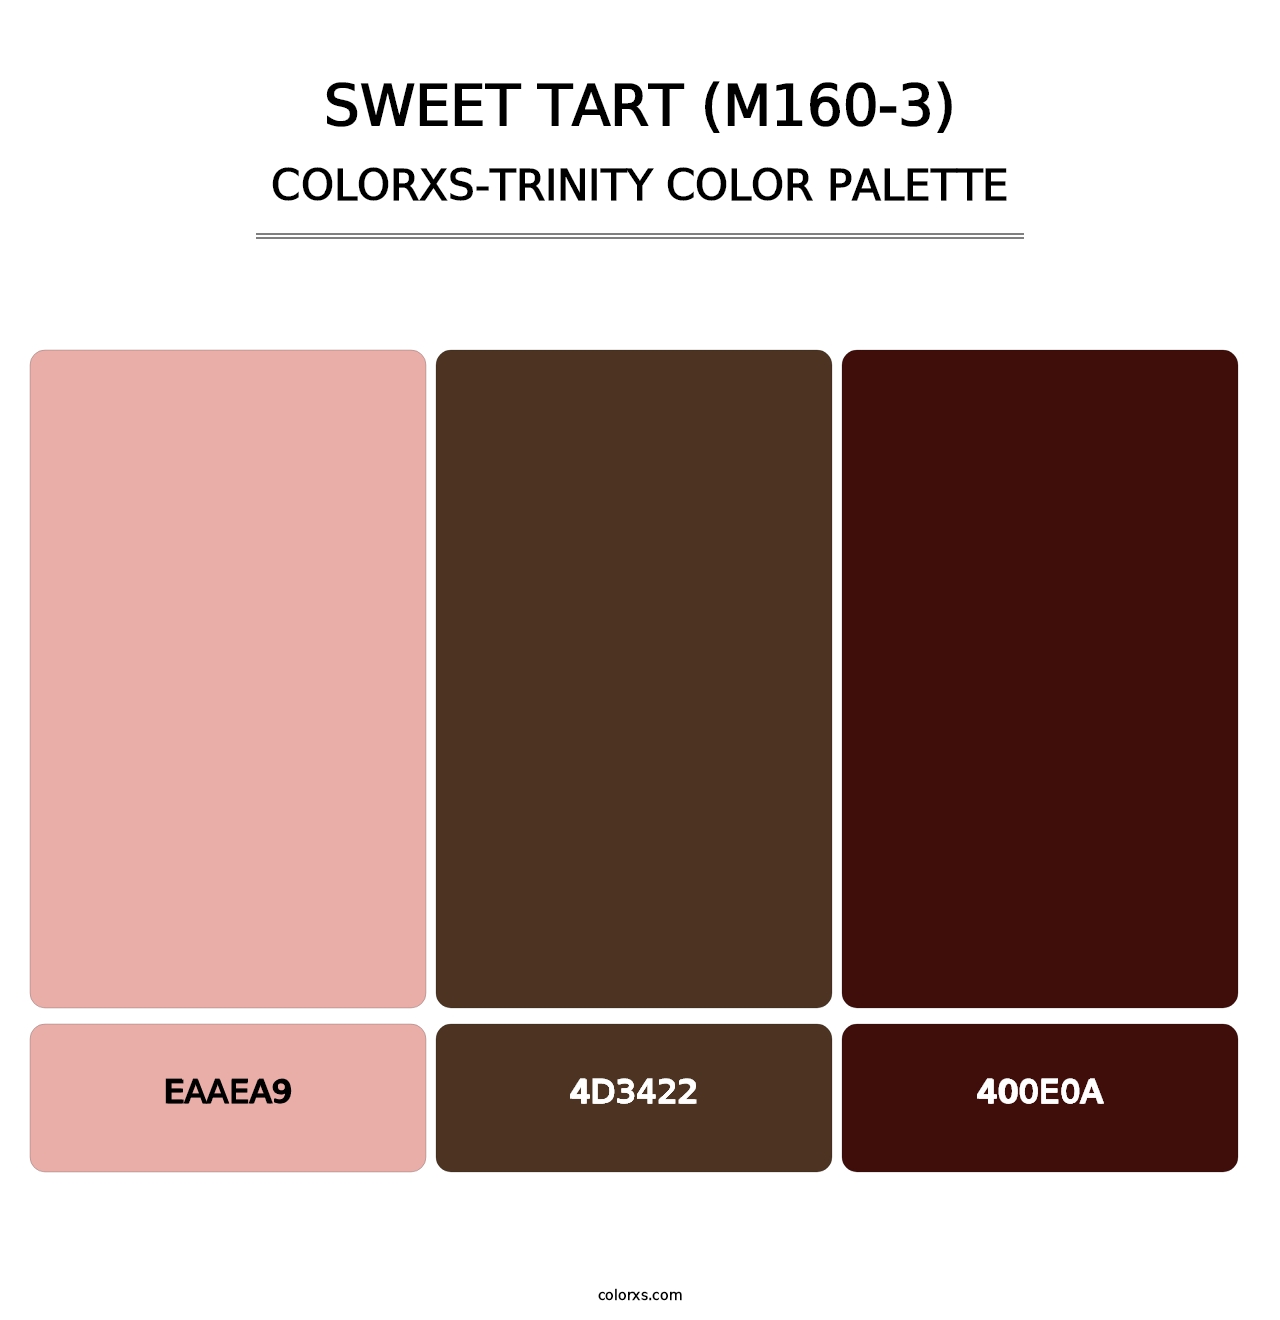 Sweet Tart (M160-3) - Colorxs Trinity Palette